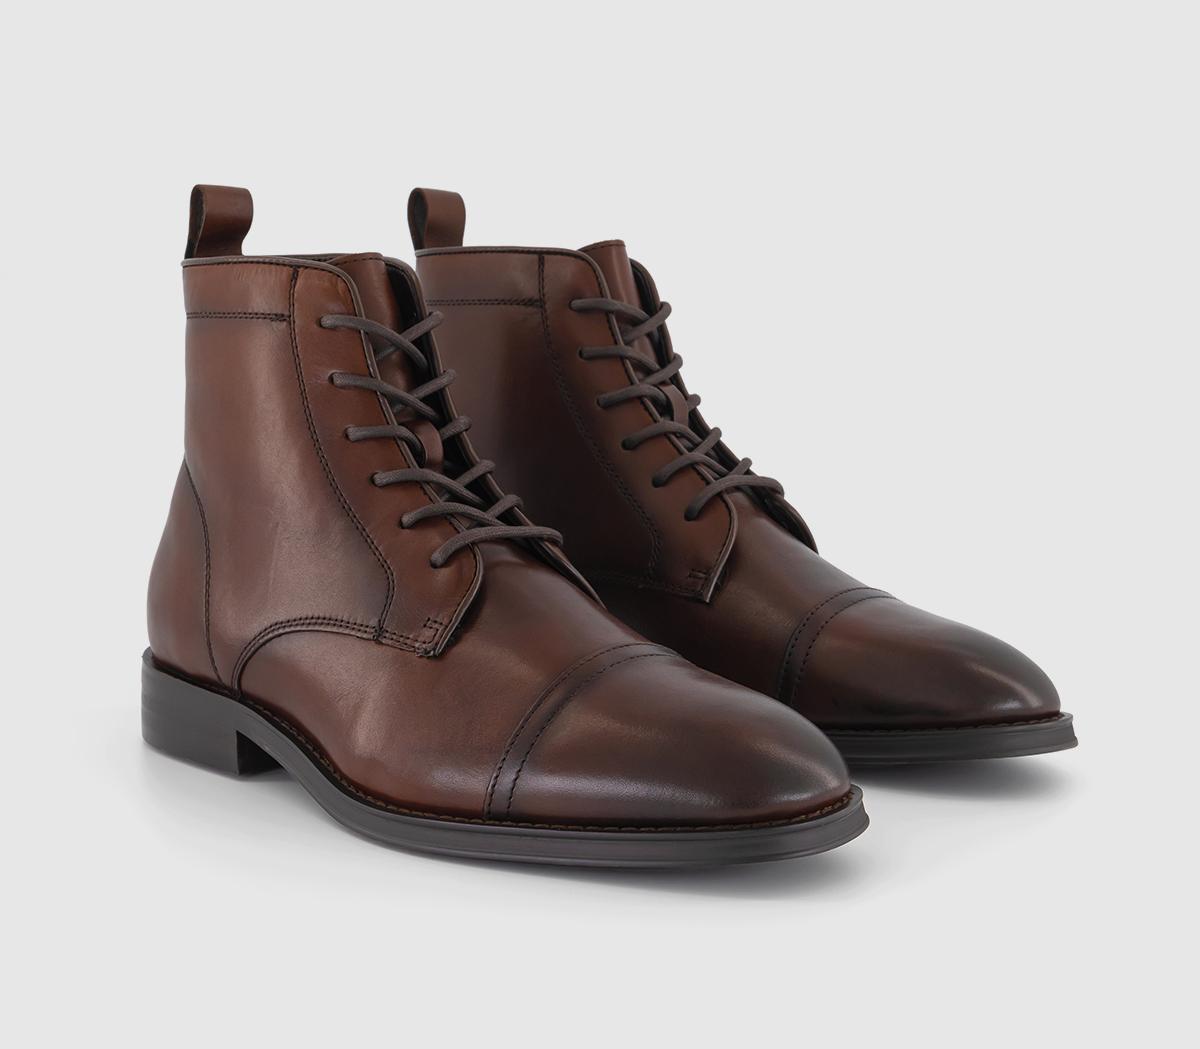 OFFICE Mens Berwick Smart Laceup Toecap Boots Chocolate Leather, 7